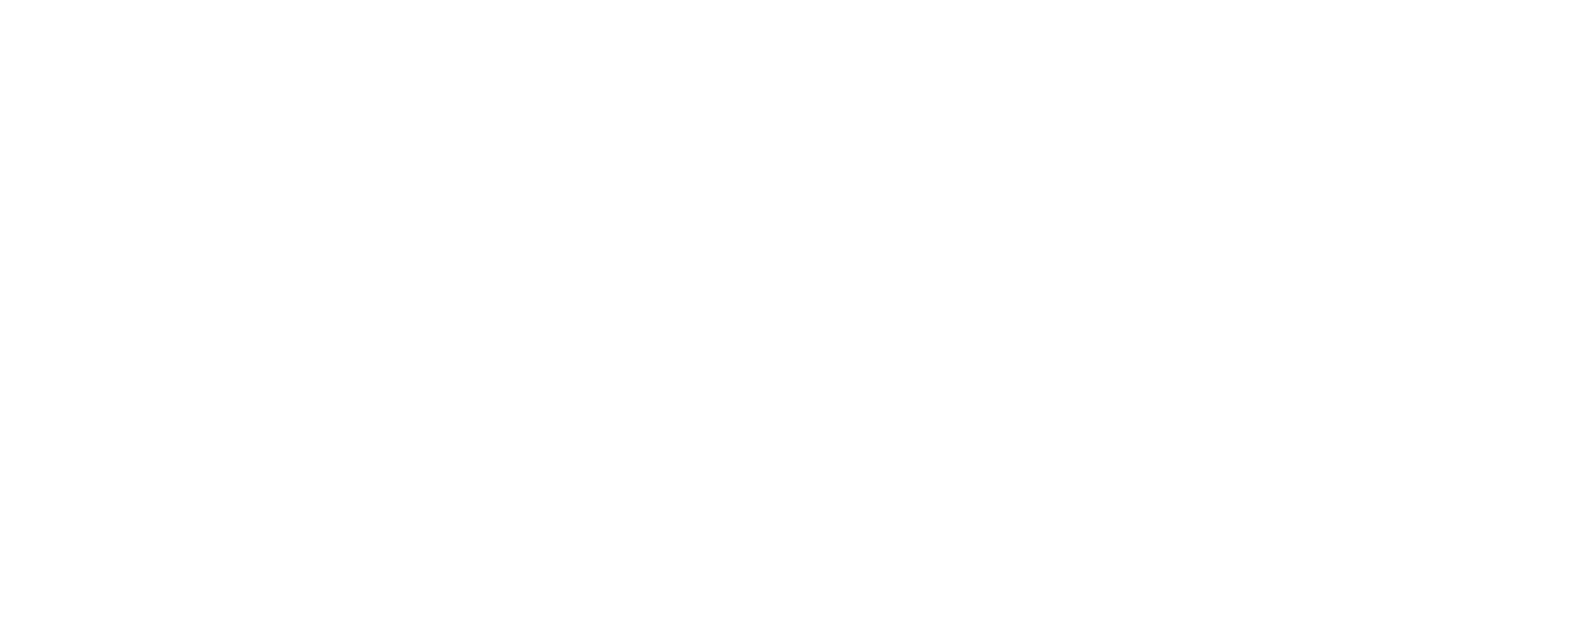 Victory Capital logo large for dark backgrounds (transparent PNG)